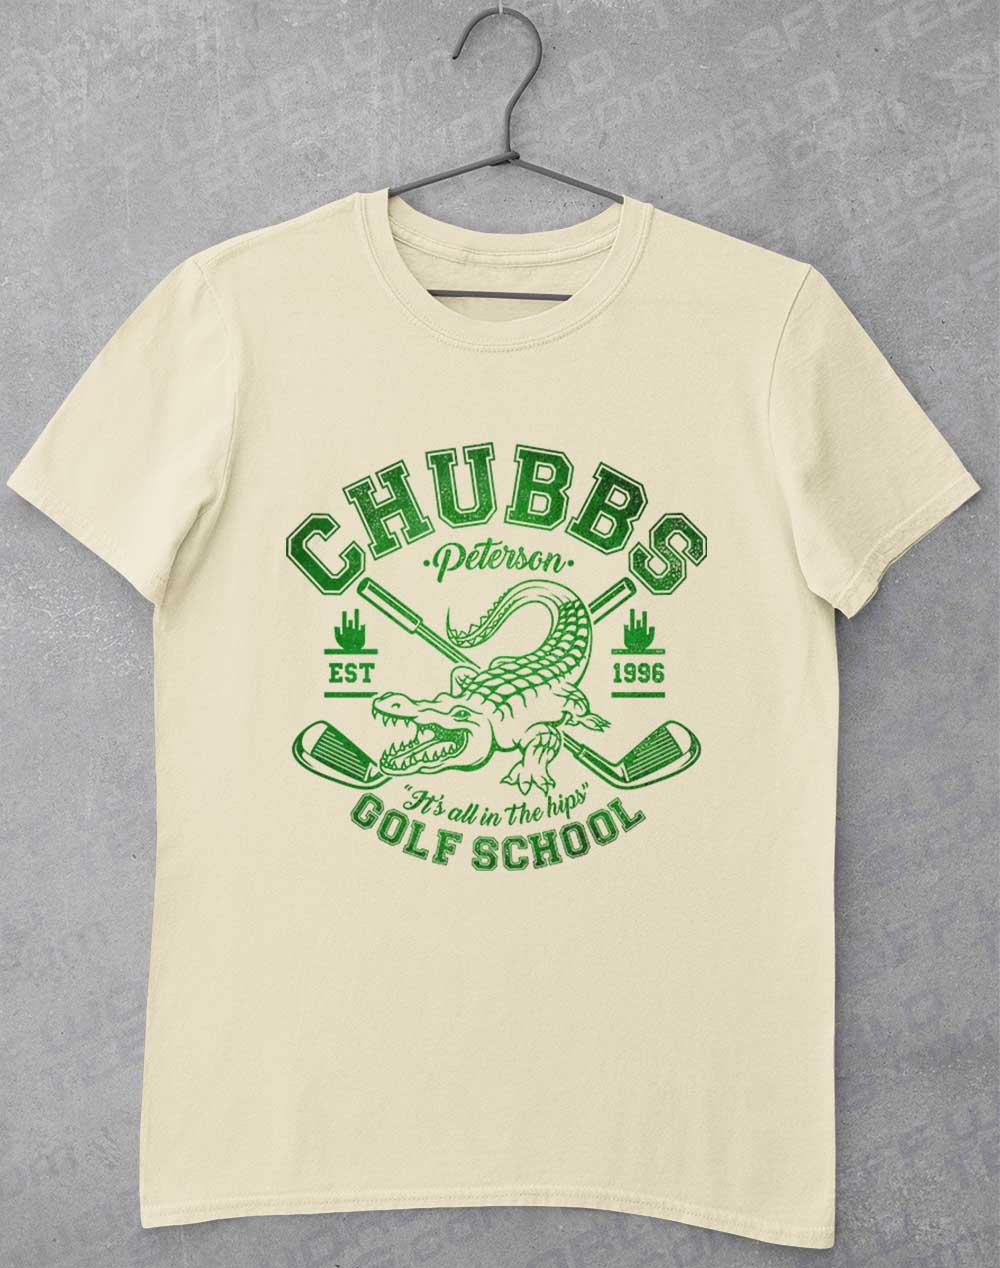 Natural - Chubb's Golf School 1996 T-Shirt